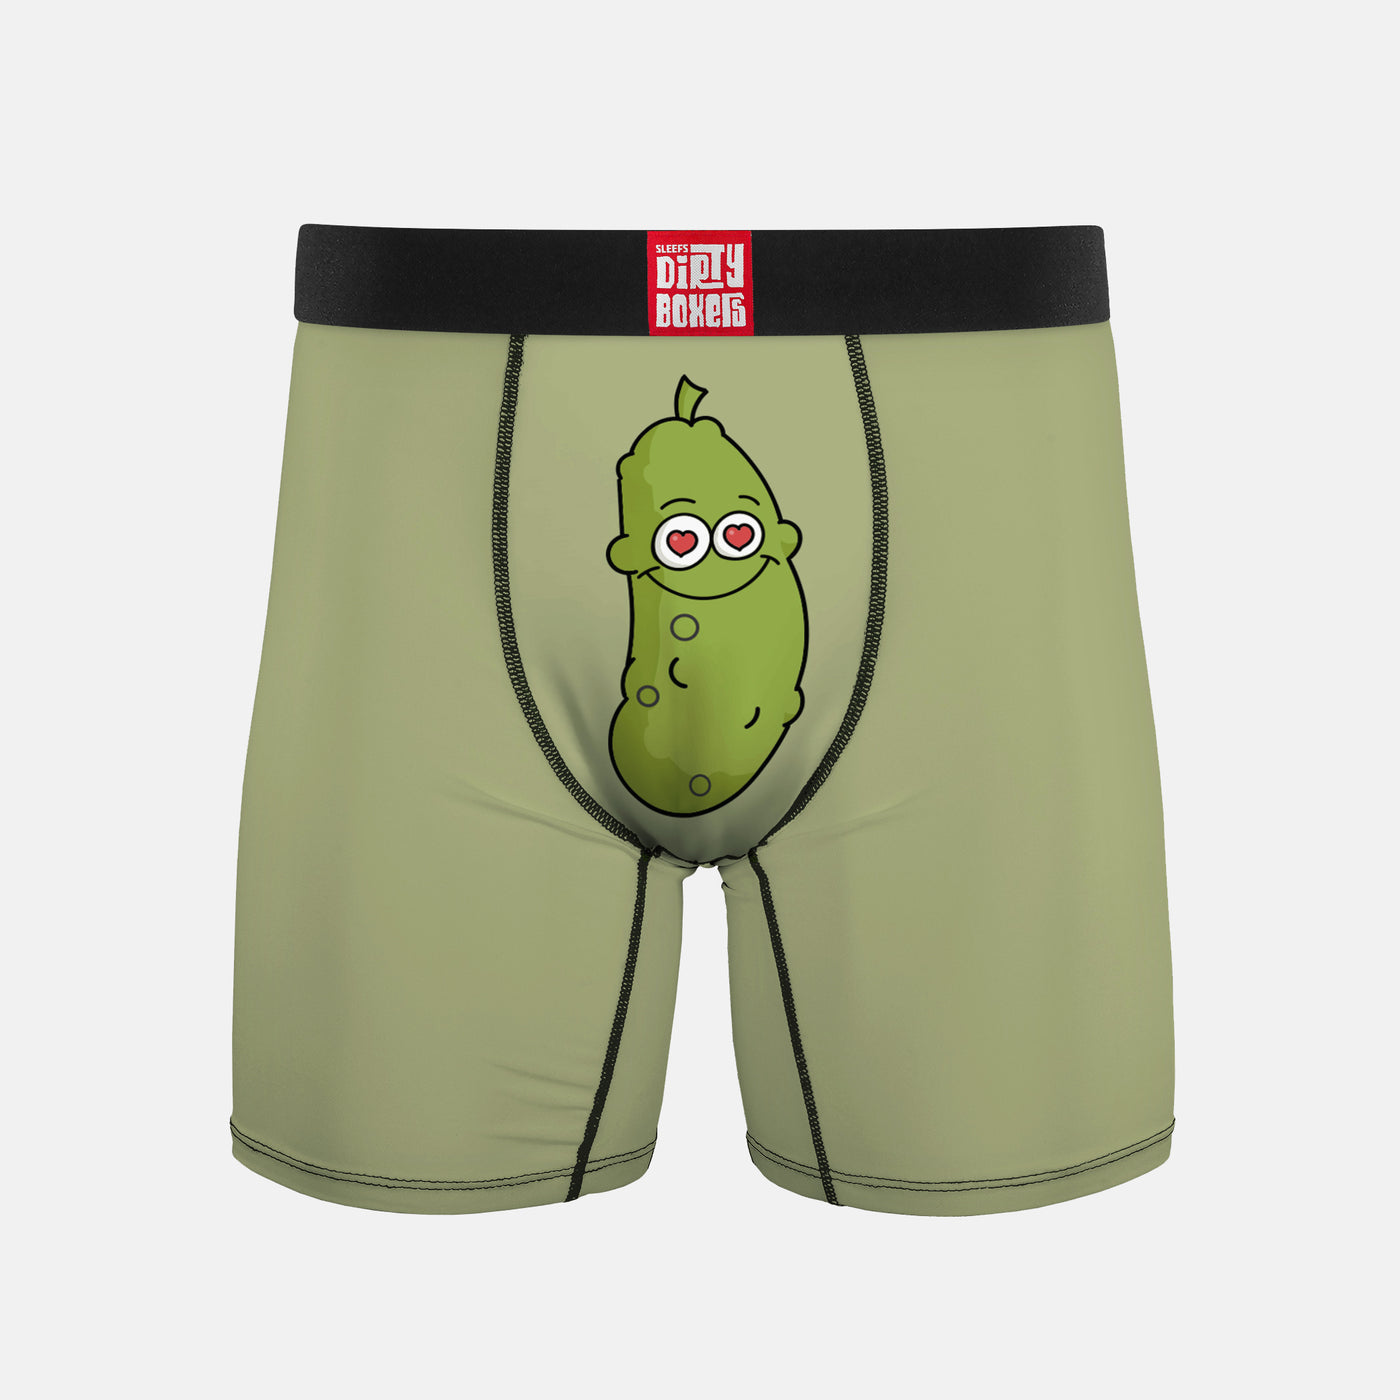 Pickle in Love Dirty Boxers Men's Underwear